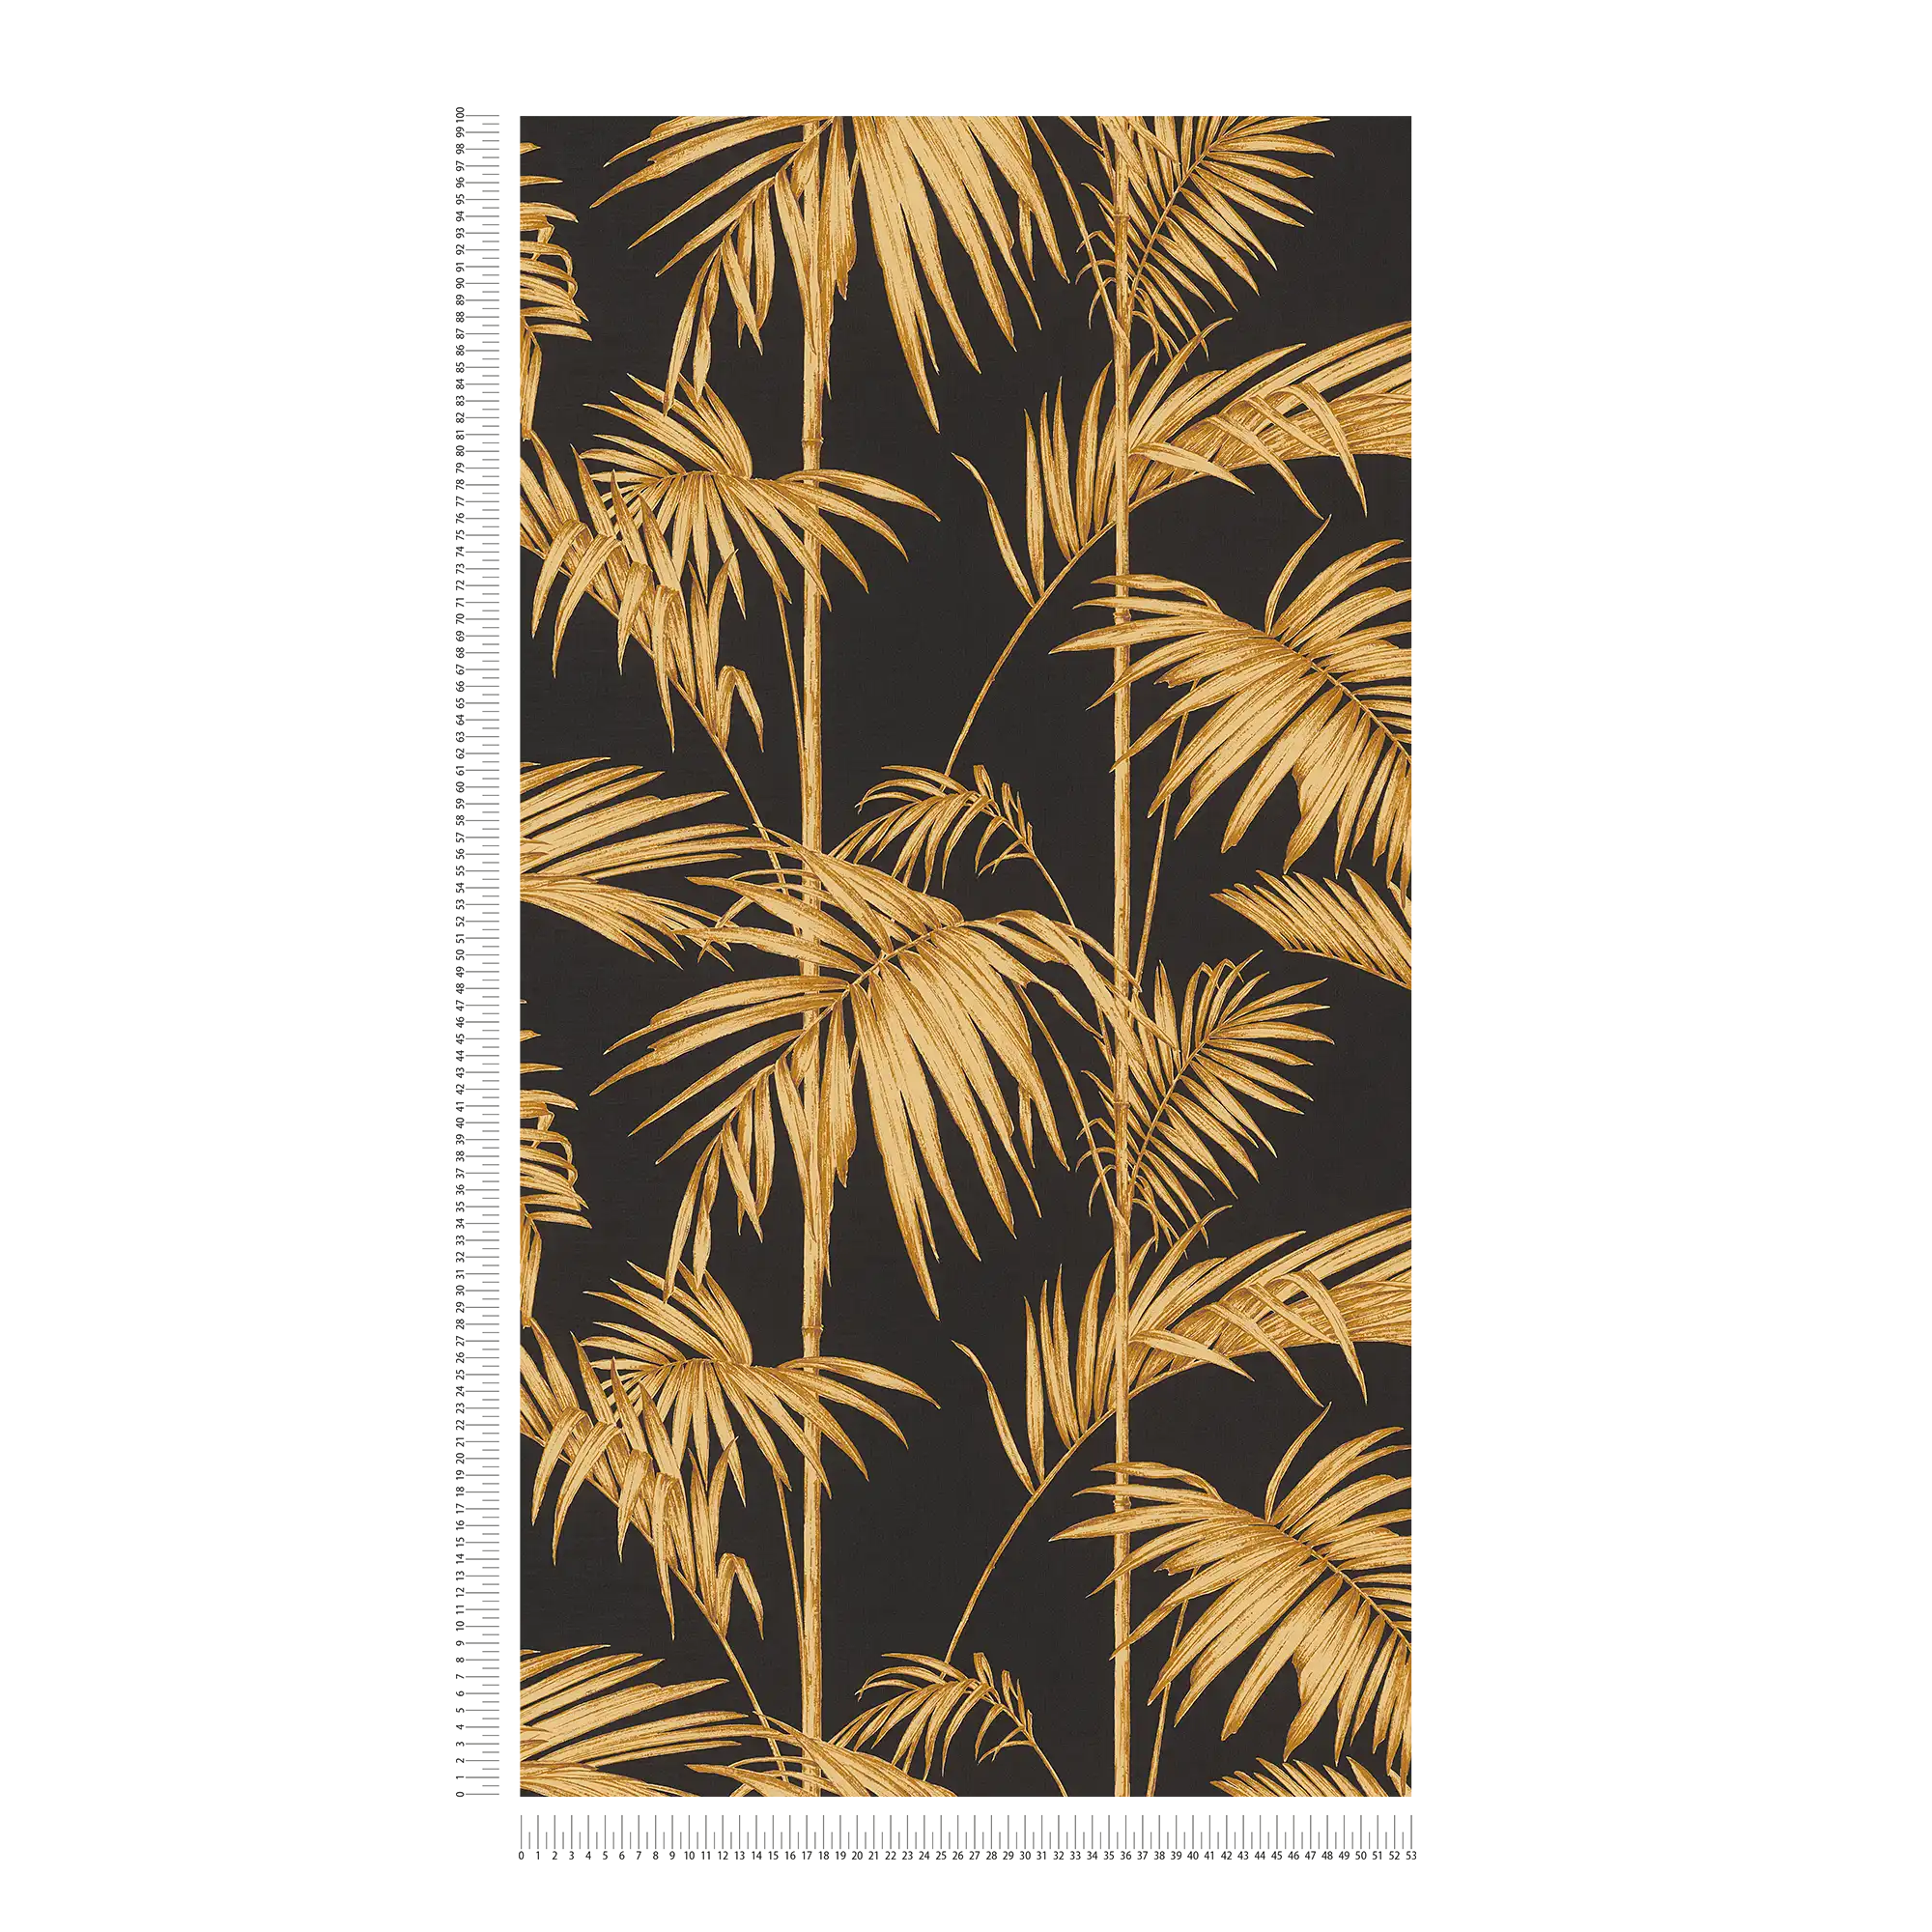             Papel Pintado Natural Hojas de Palma, Bambú - Oro, Negro, Naranja
        